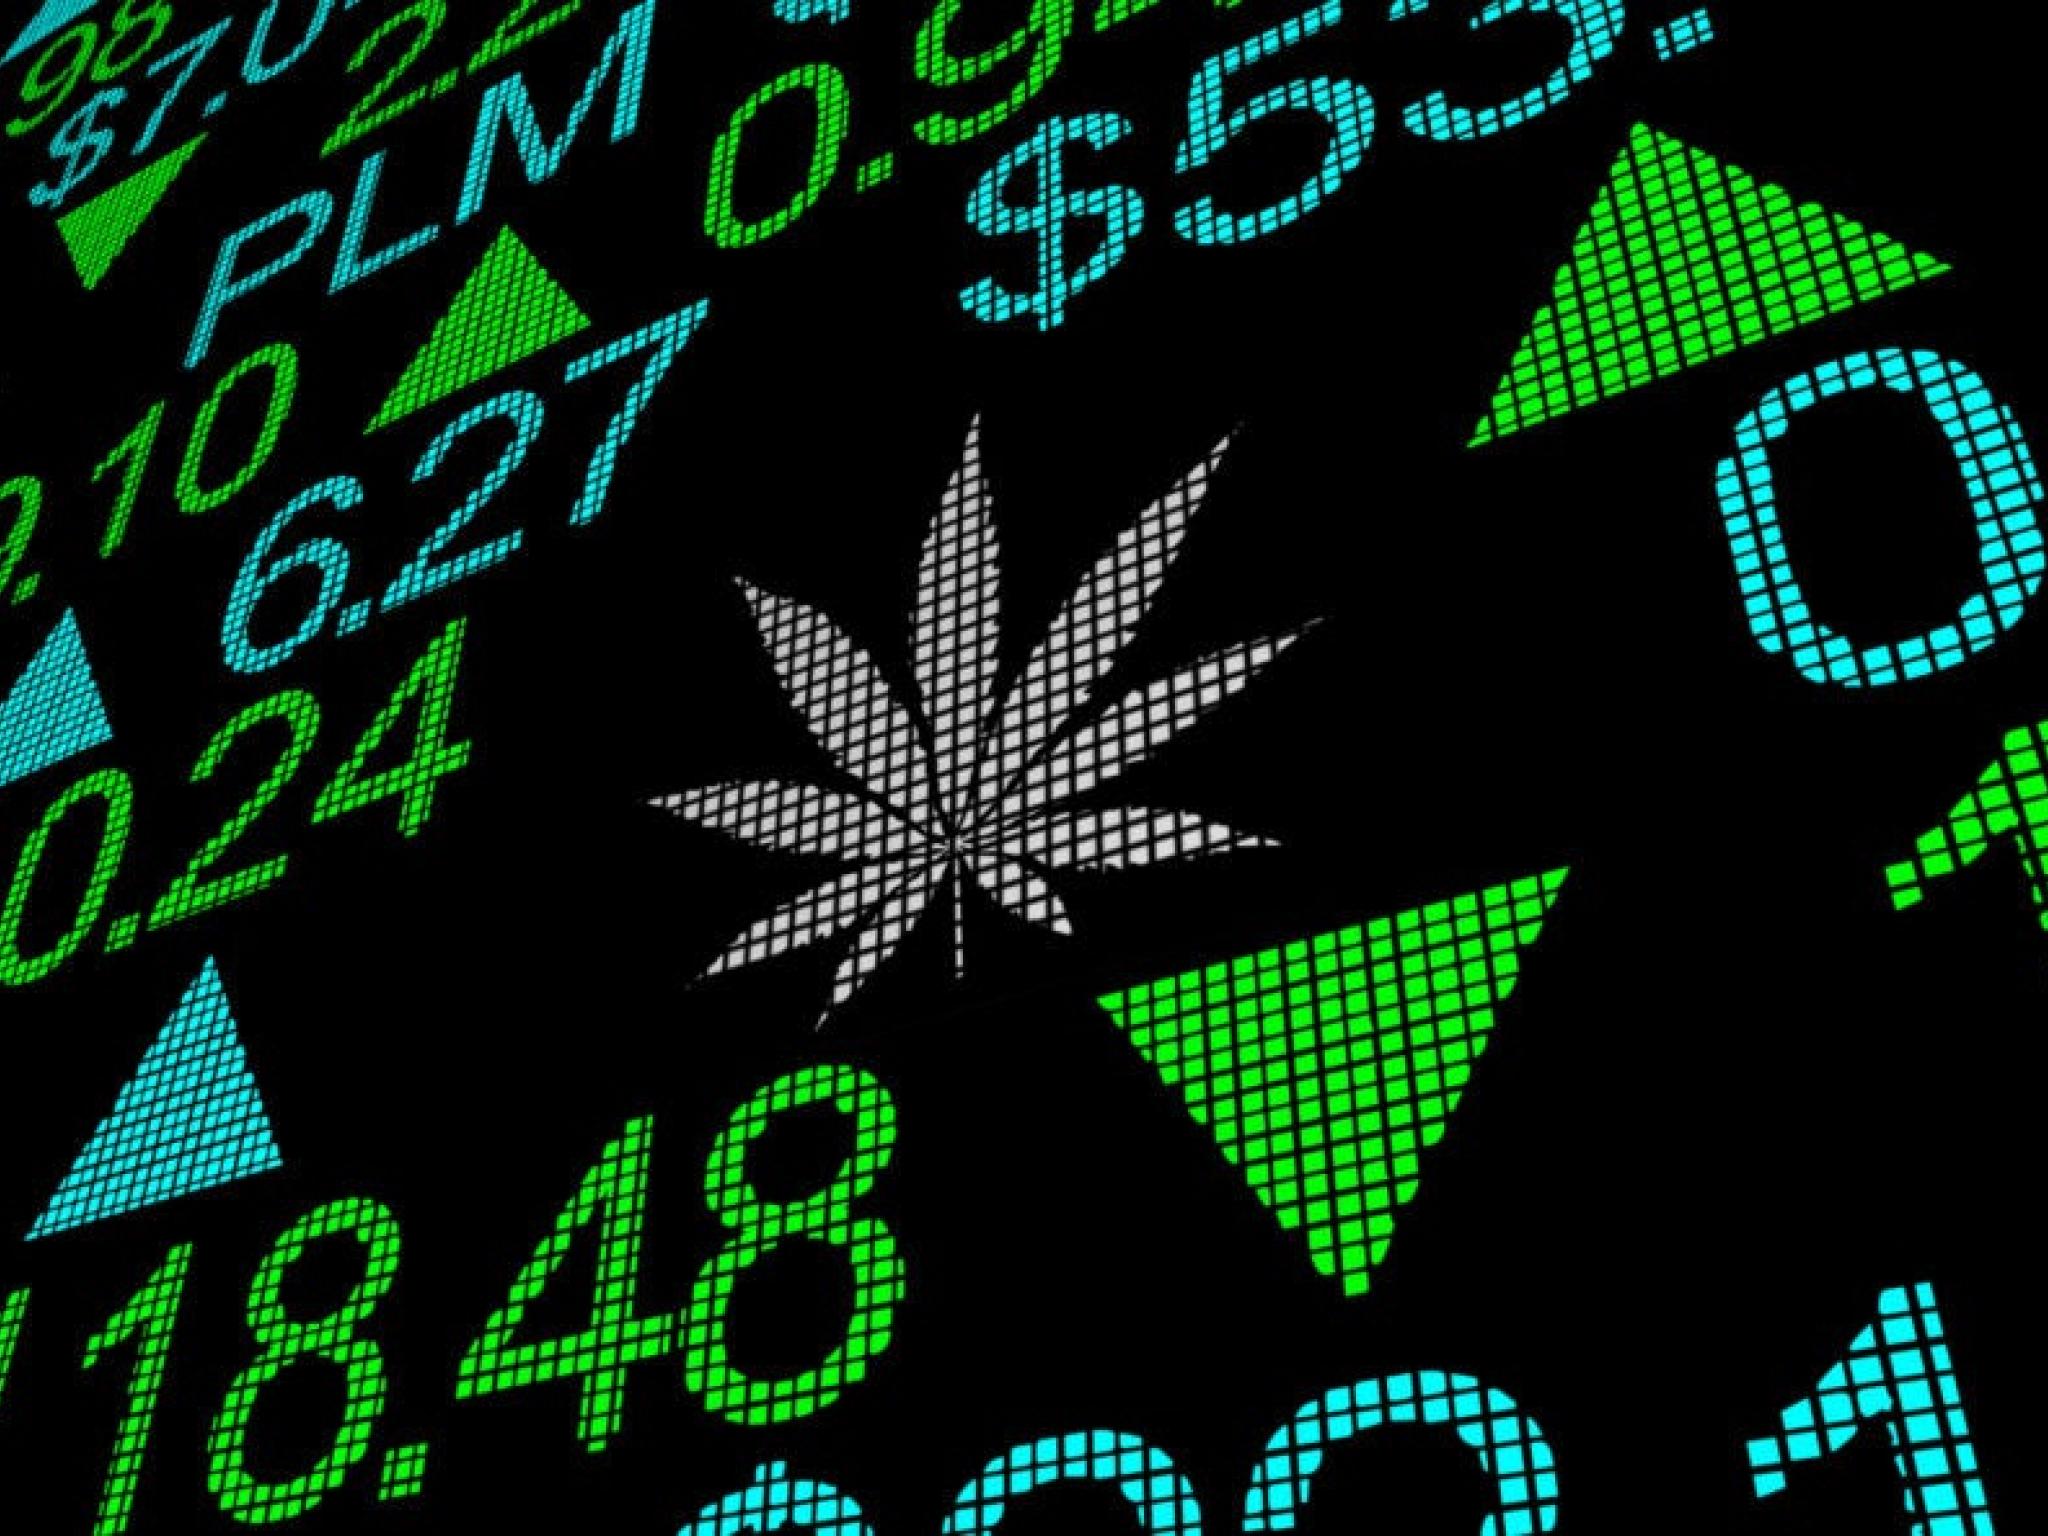  weed-stocks-rally-after-biden-makes-marijuana-reclassification-announcement 